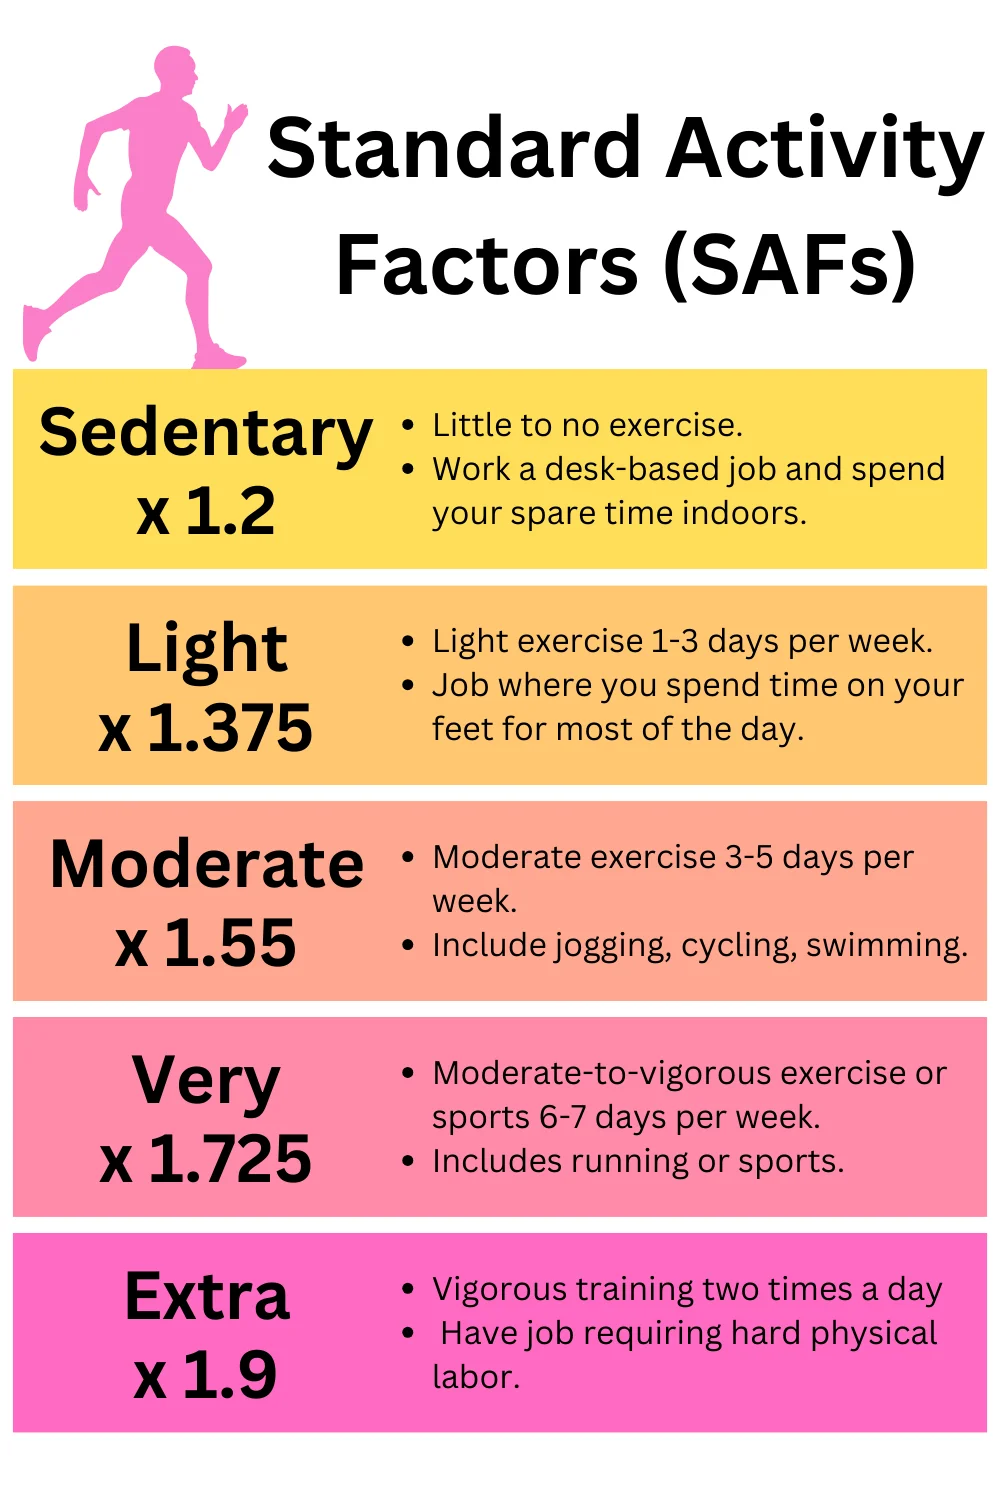 Standard Activity Factors - SAFs adjust the calorie estimate by multiplying your BMR